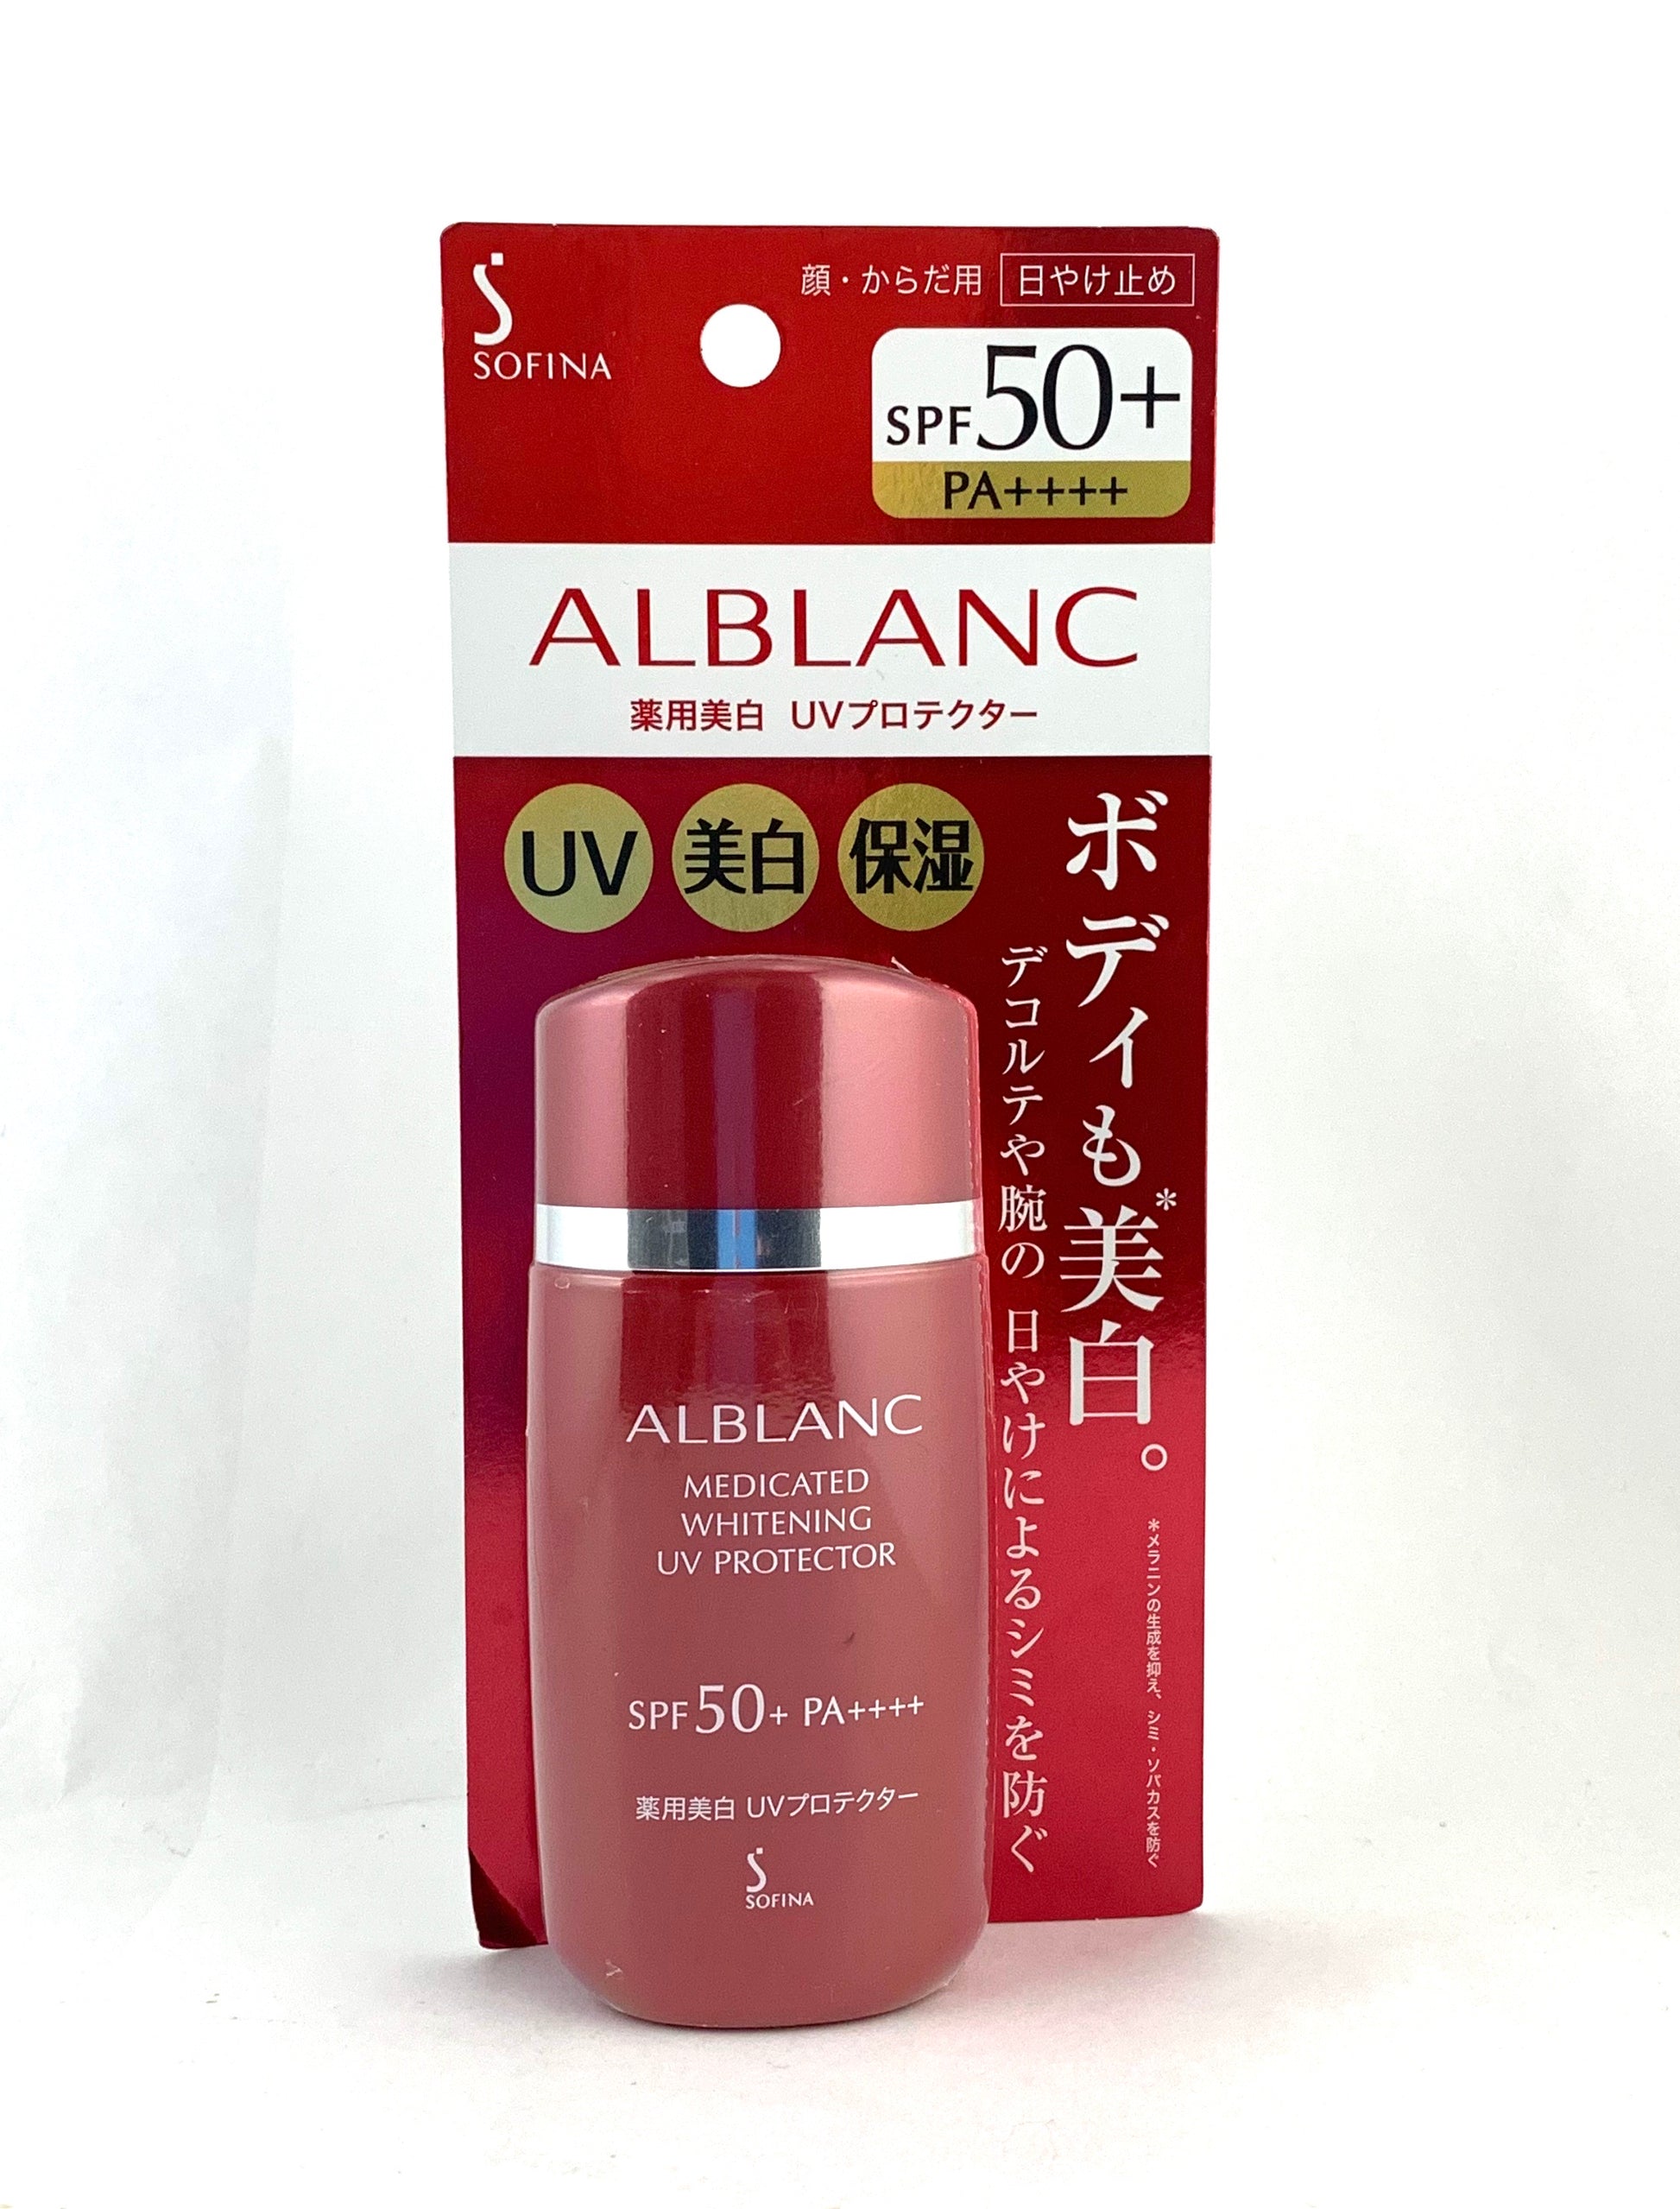 Sofina Alblanc Medicated Whitening UV Protector SPF50+ PA++++60ml.